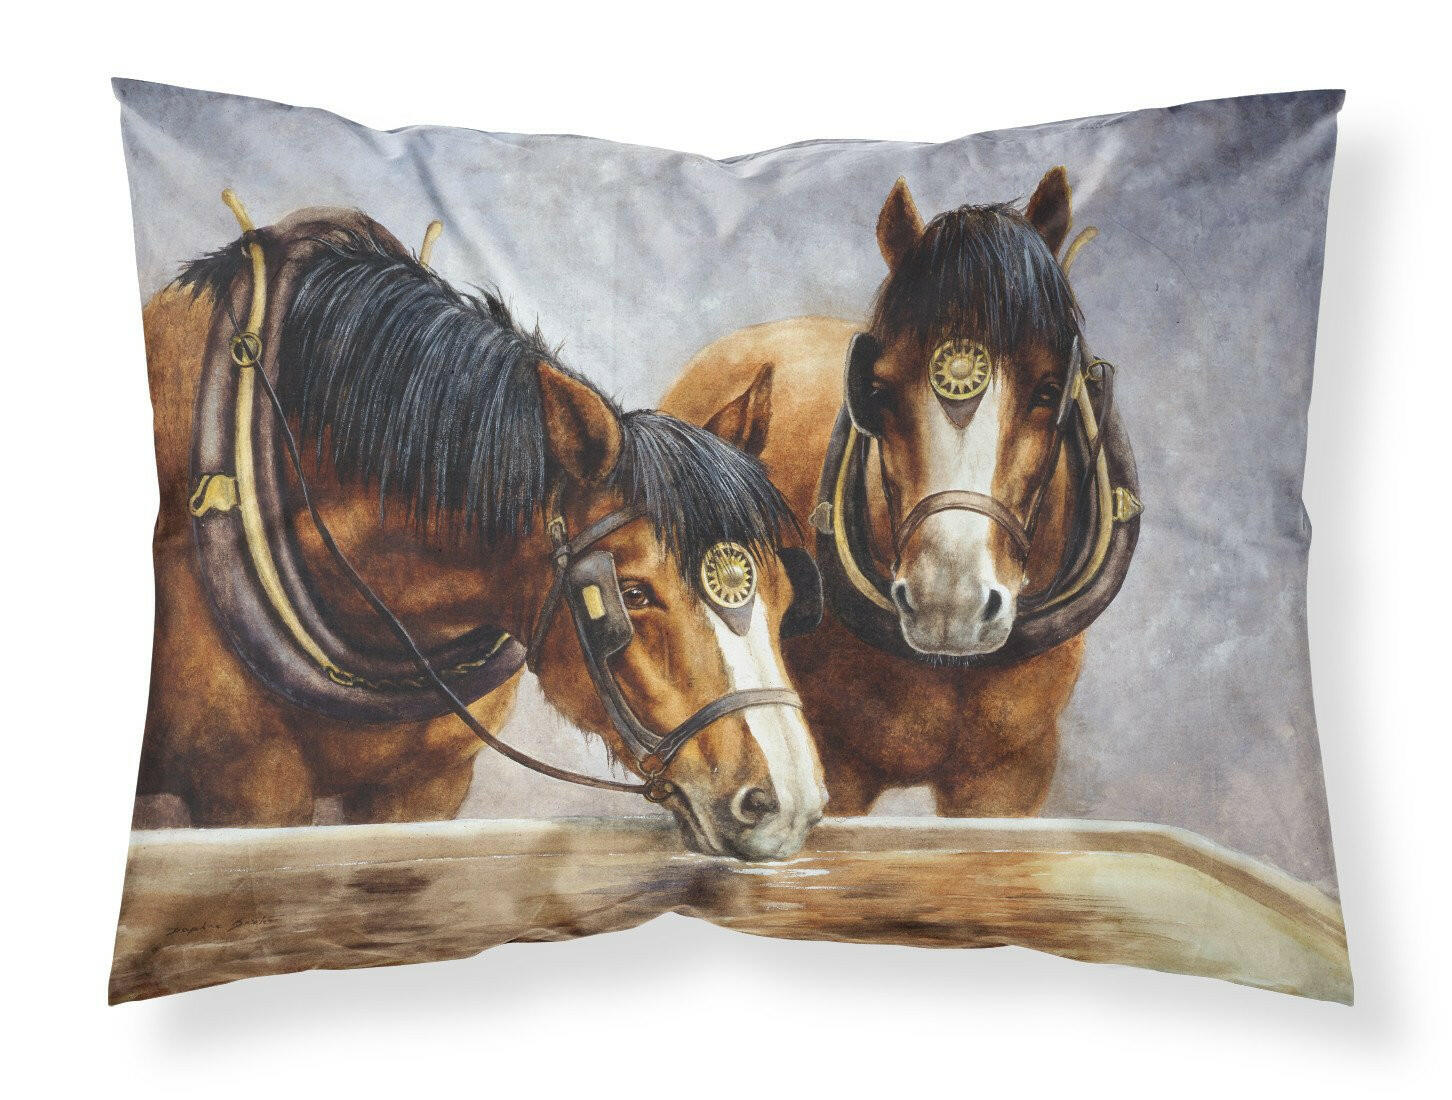 Horses Taking a Drink of Water Fabric Standard Pillowcase BDBA0119PILLOWCASE by Caroline's Treasures